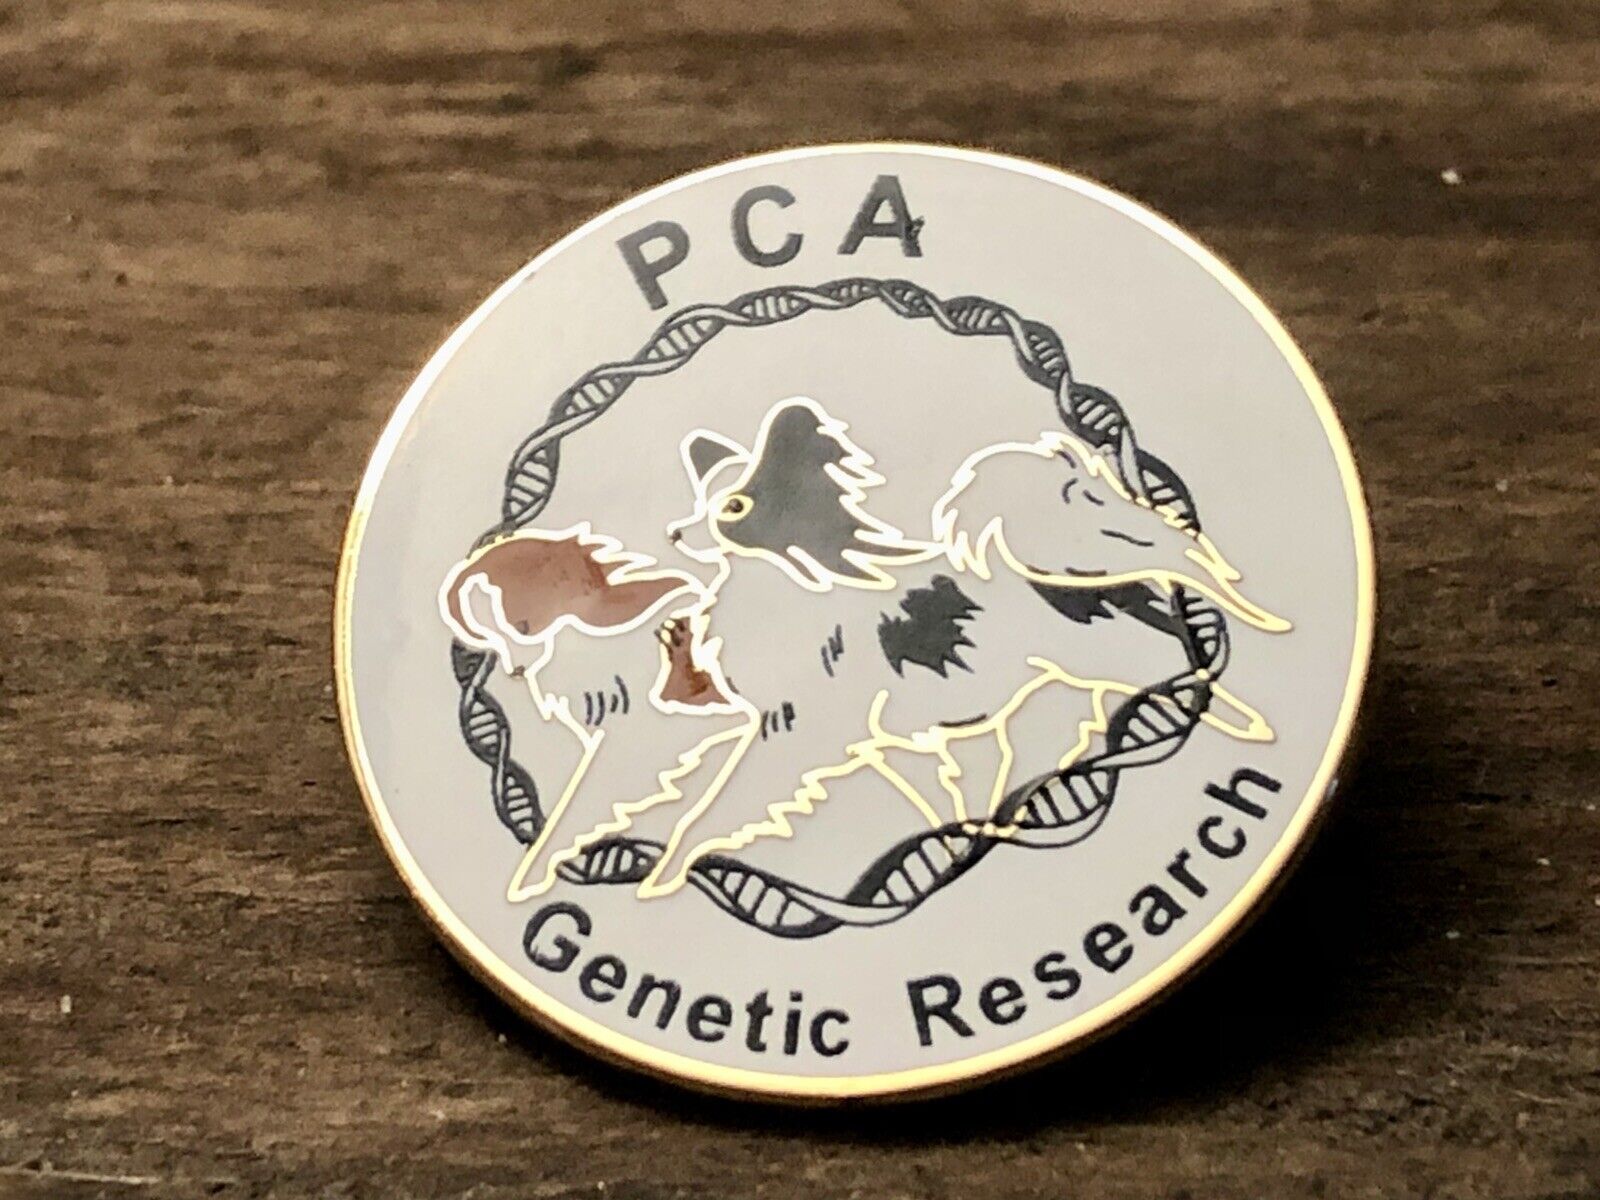 PCA Genetic Research Lapel Pin Enamel